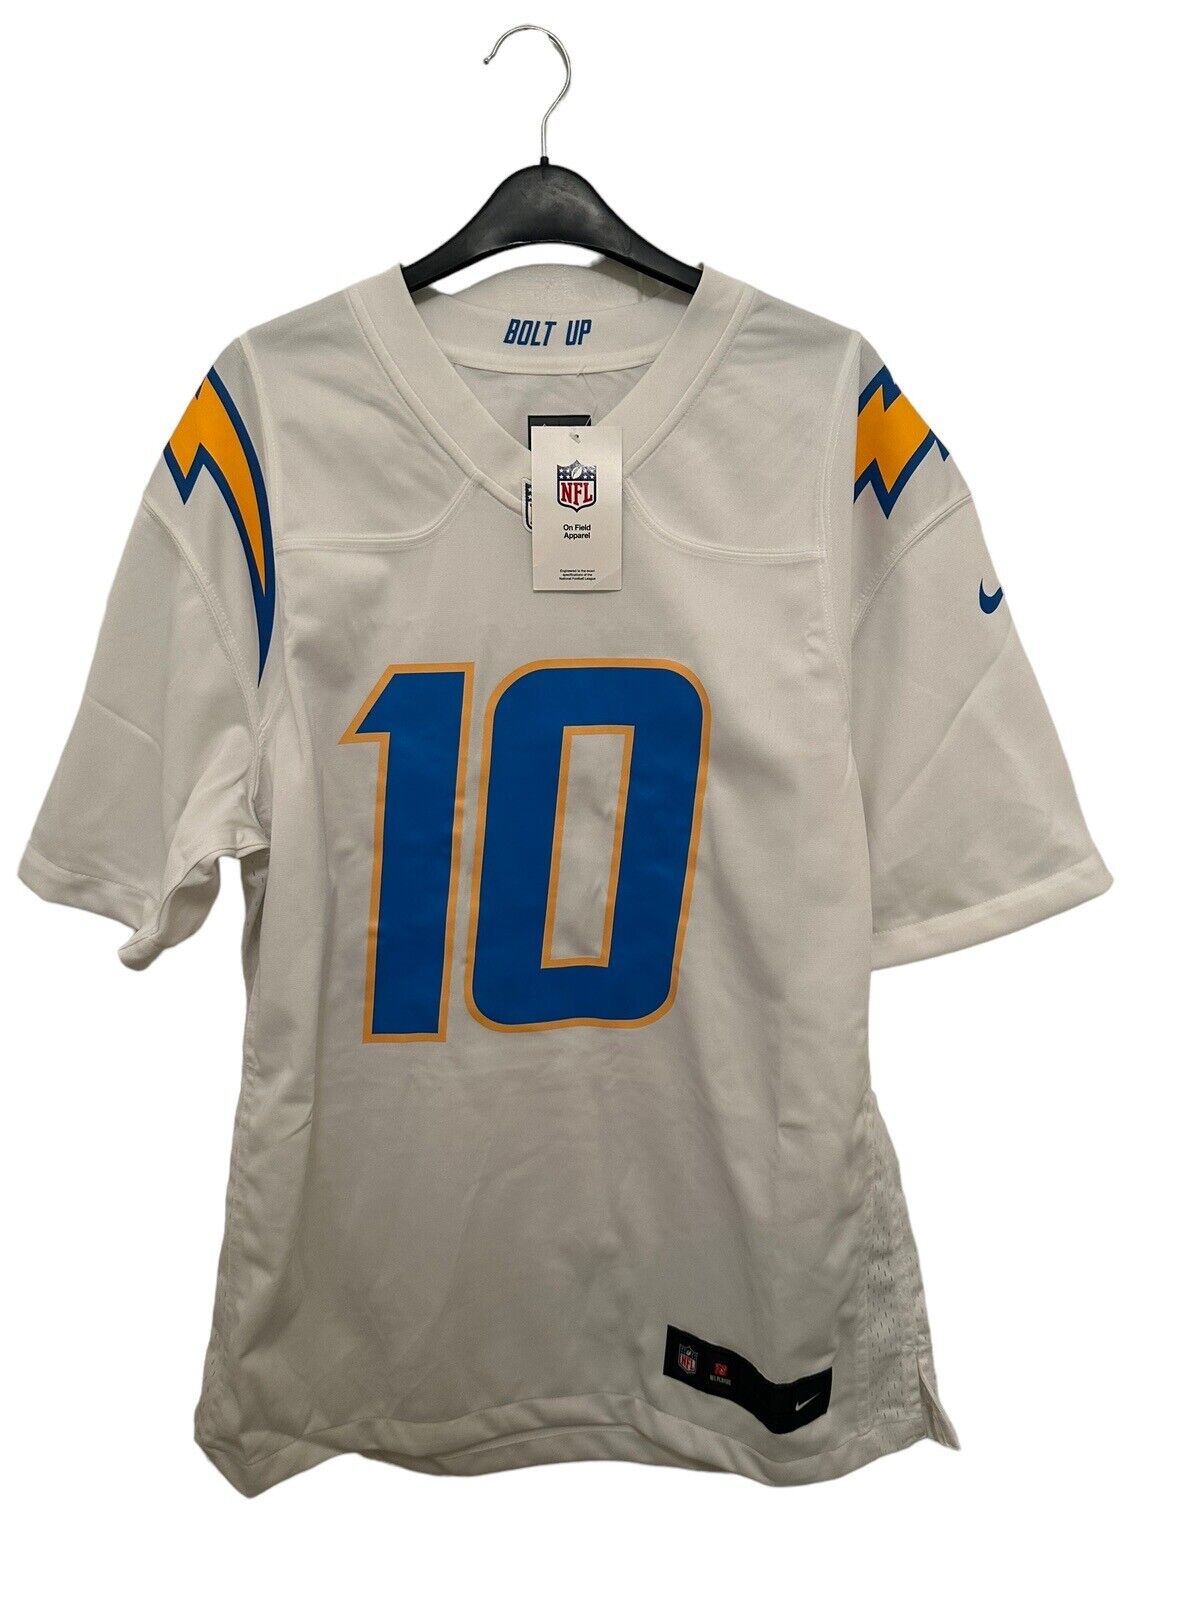 Nike NFL Los Angeles Chargers Game Jersey - HERBERT 10 - Men’s Size Medium